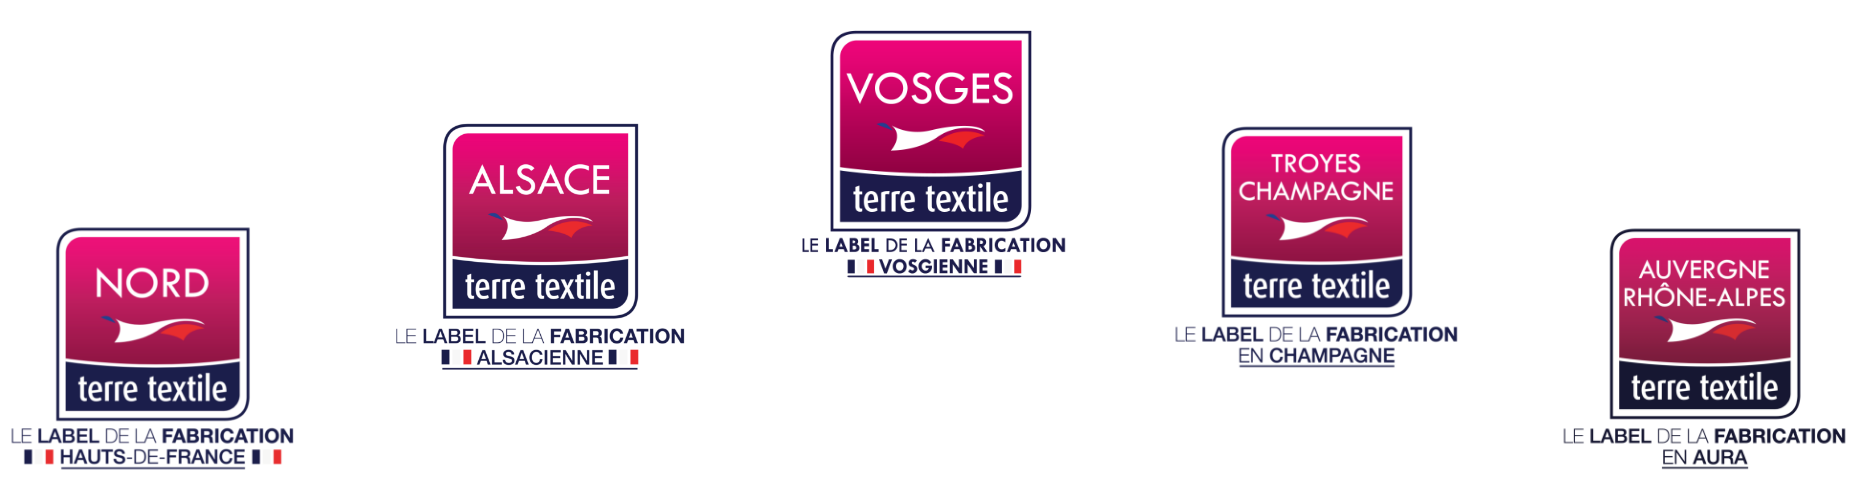 France Terre Textile Interface Logos Pyramide 2x